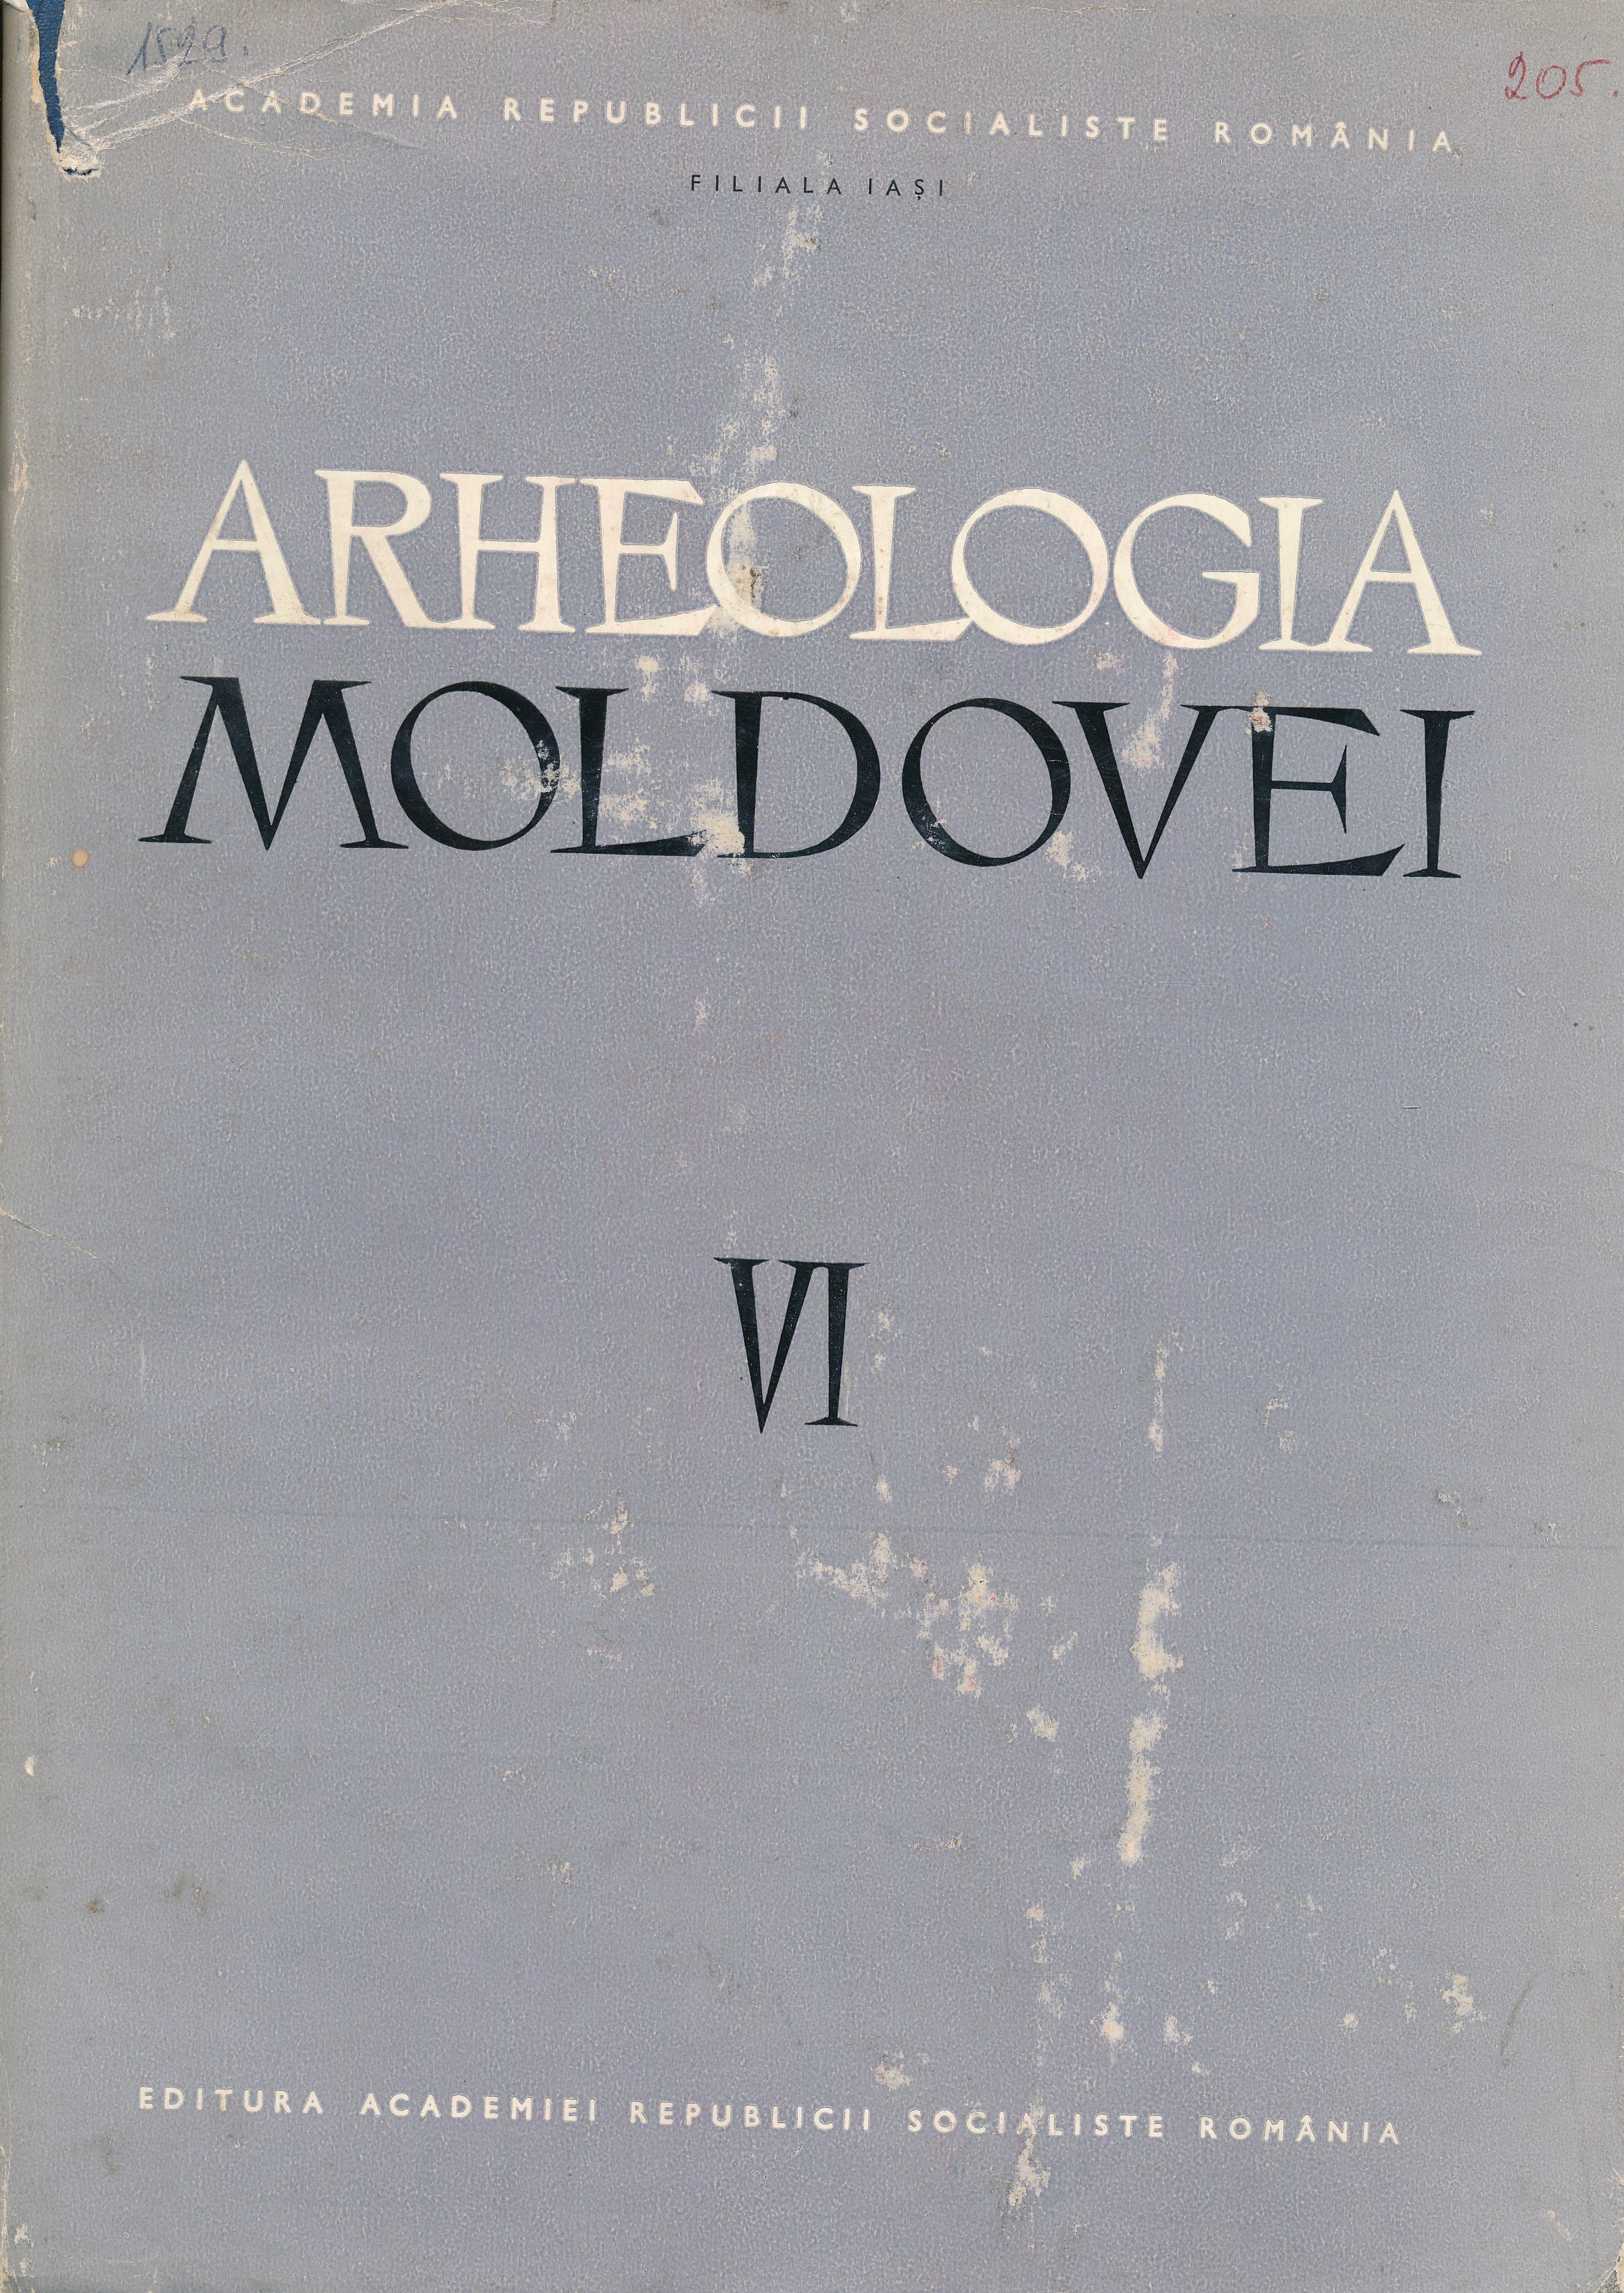 Arheologia Moldevei VI. (Erkel Ferenc Területi Múzeum, Gyula CC BY-NC-SA)